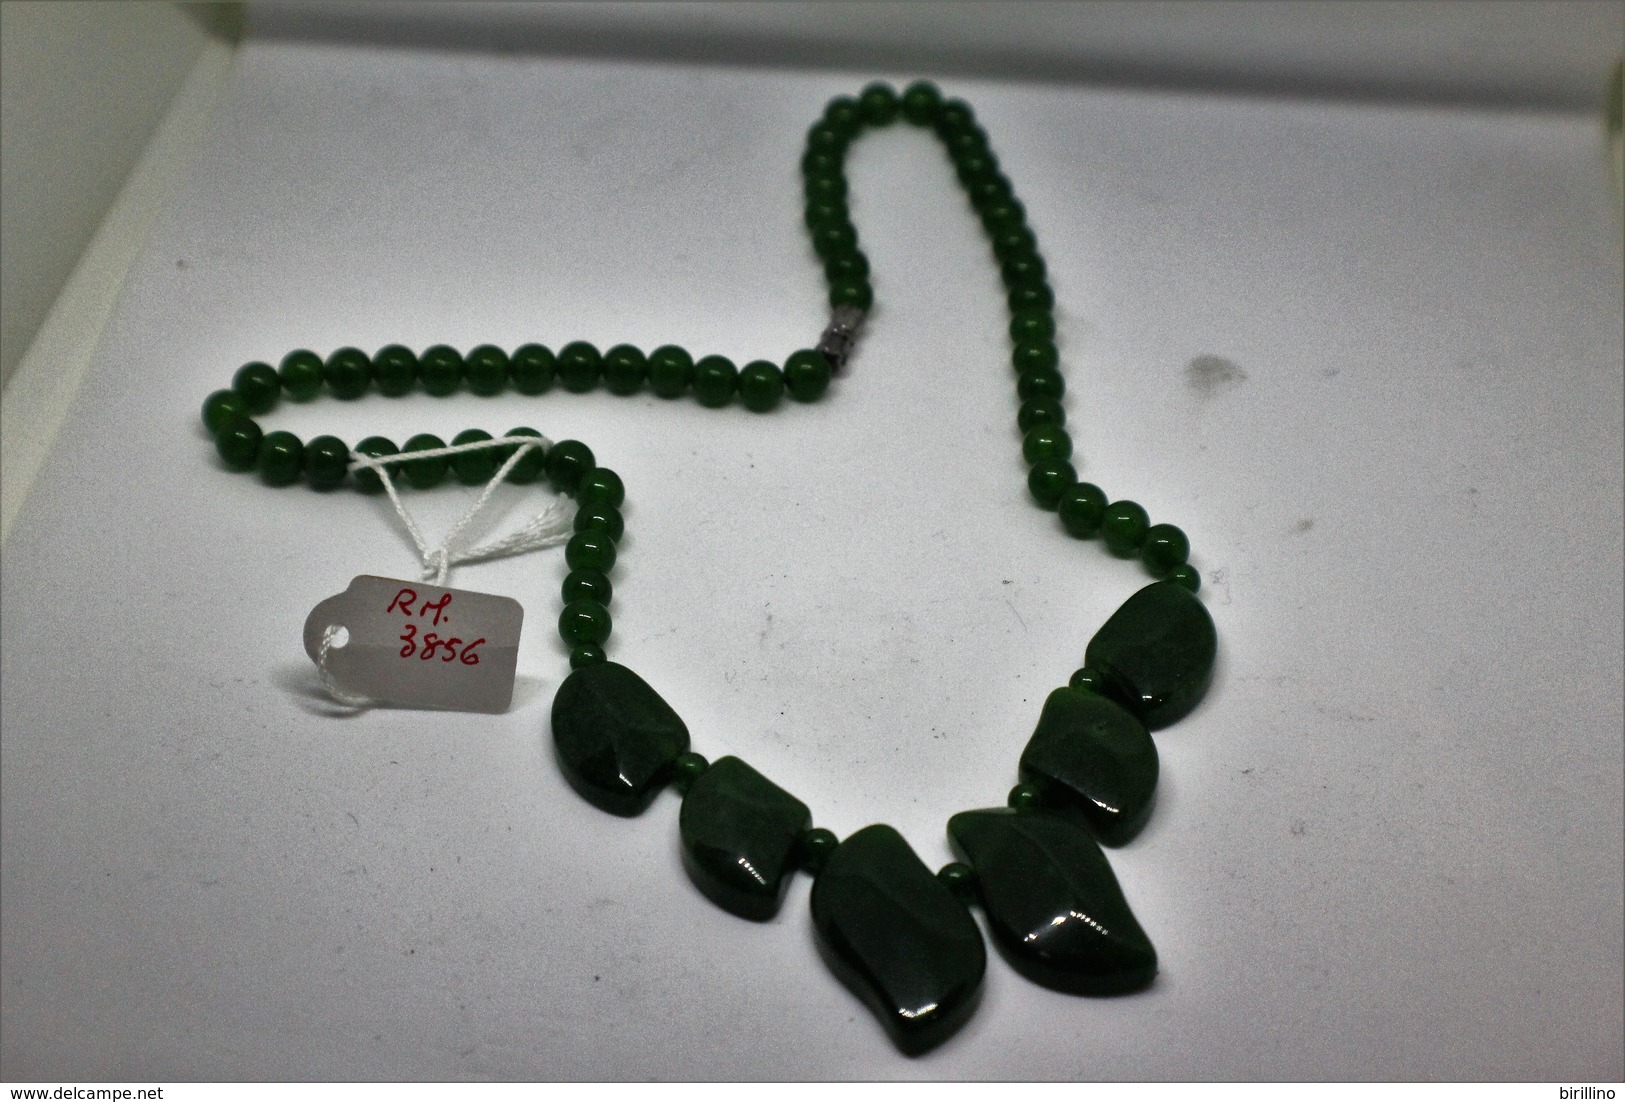 3856 - Collana Di Giada Naturale (serpentino New Jade) Lucidata A Mano. Peso Totale 44 Gr. - Arte Oriental